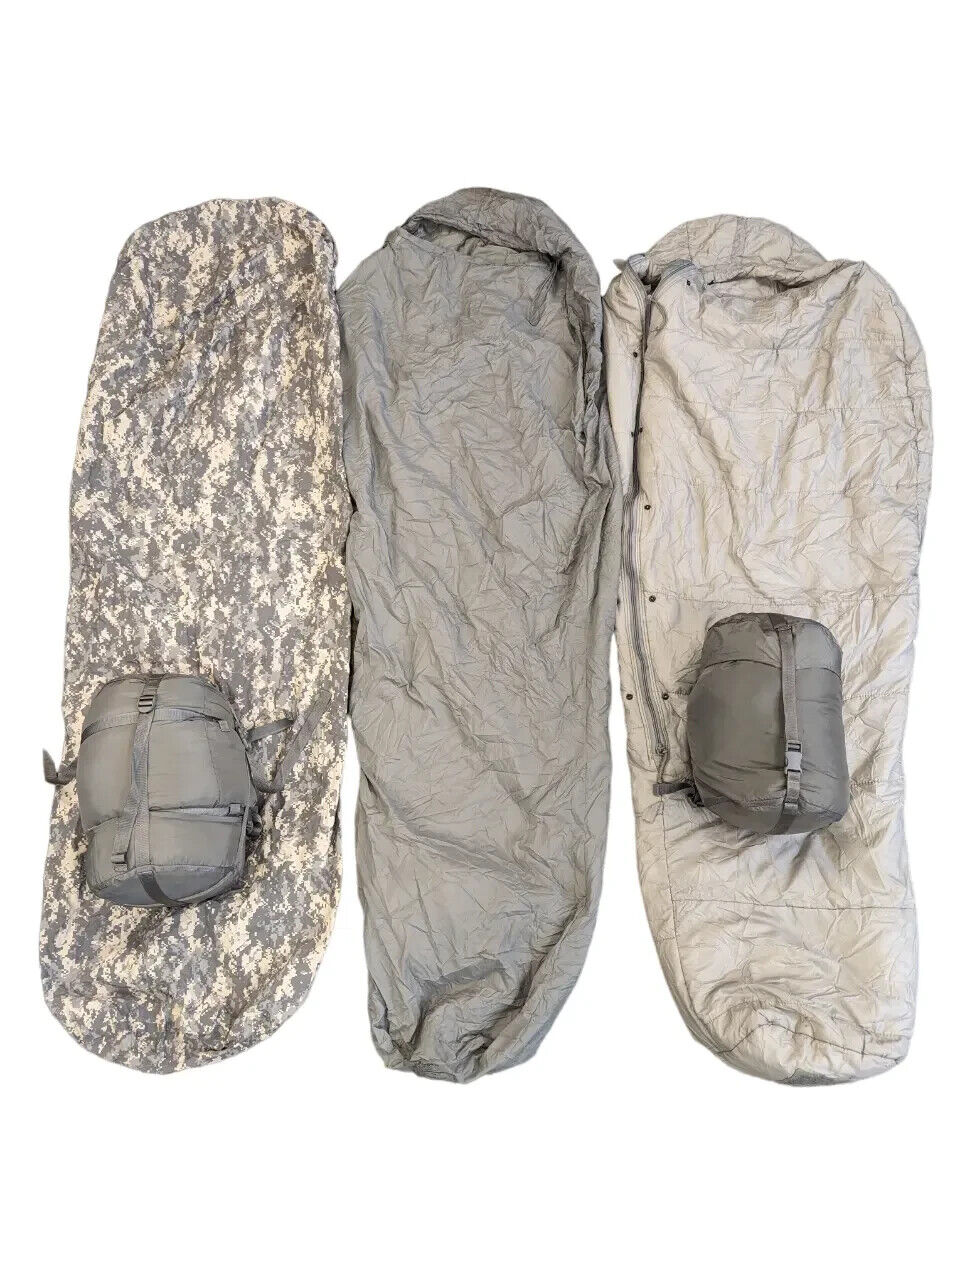 US Military Army 5 Piece Modular Sleeping Bag Sleep System - MSS - ACU